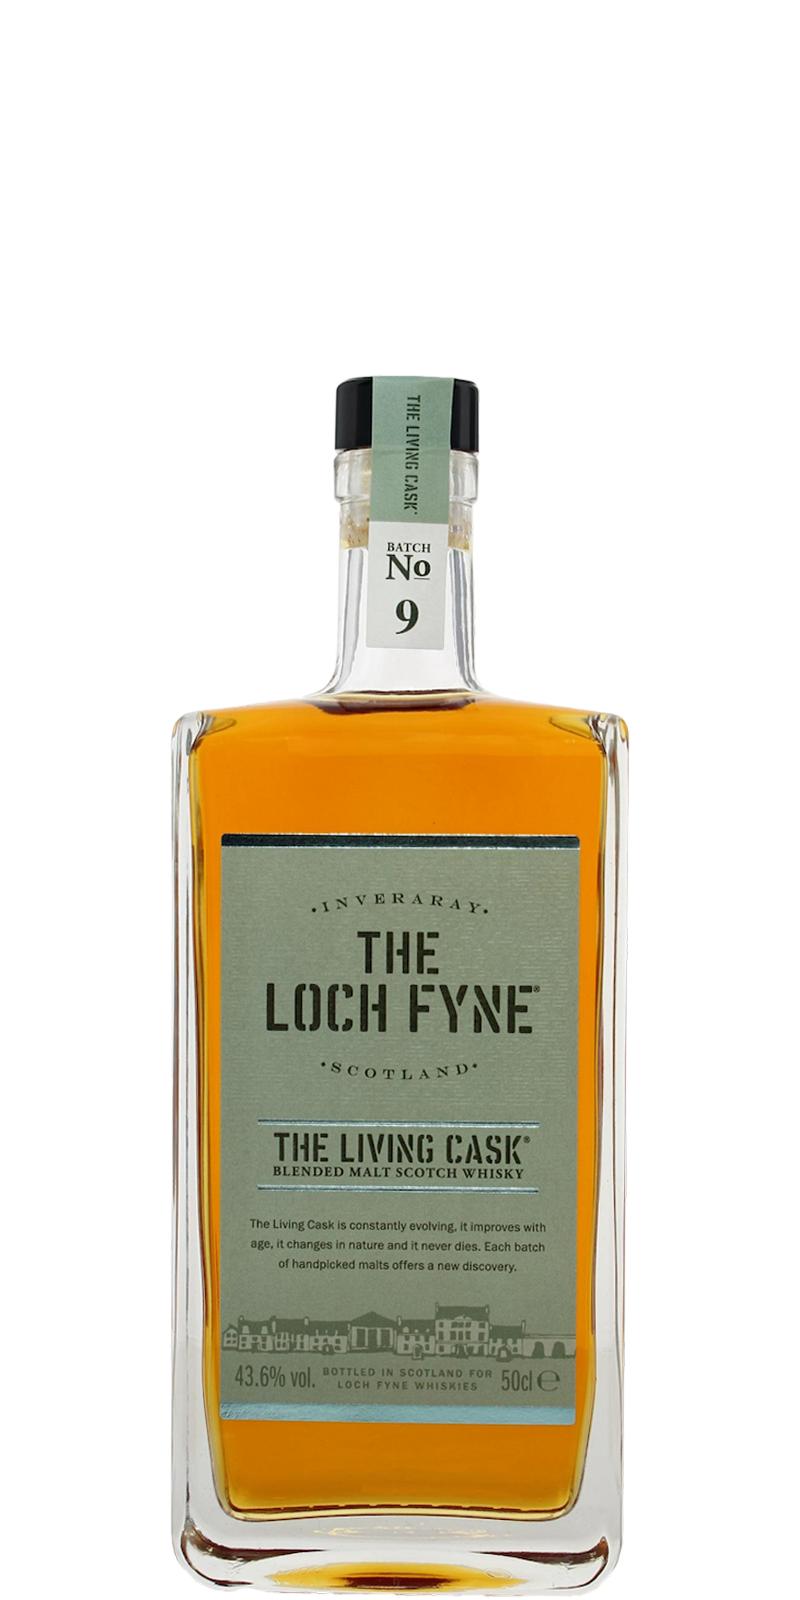 The Loch Fyne The Living Cask LF Batch 9 43.6% 500ml